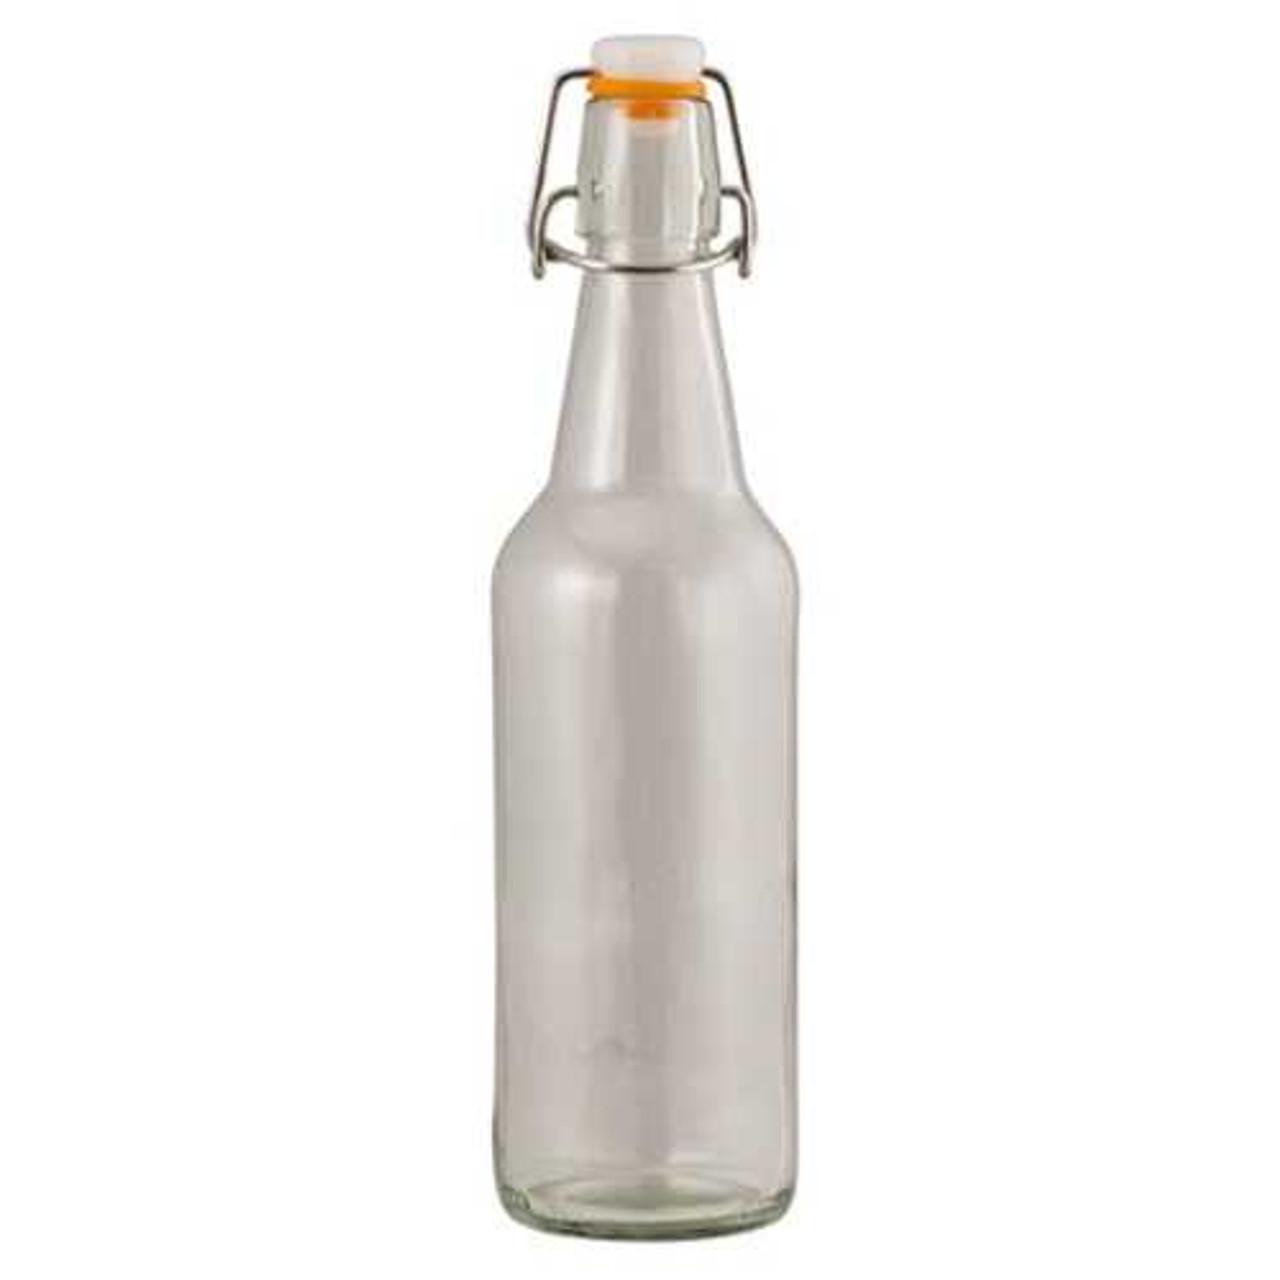 12oz Glass bottle